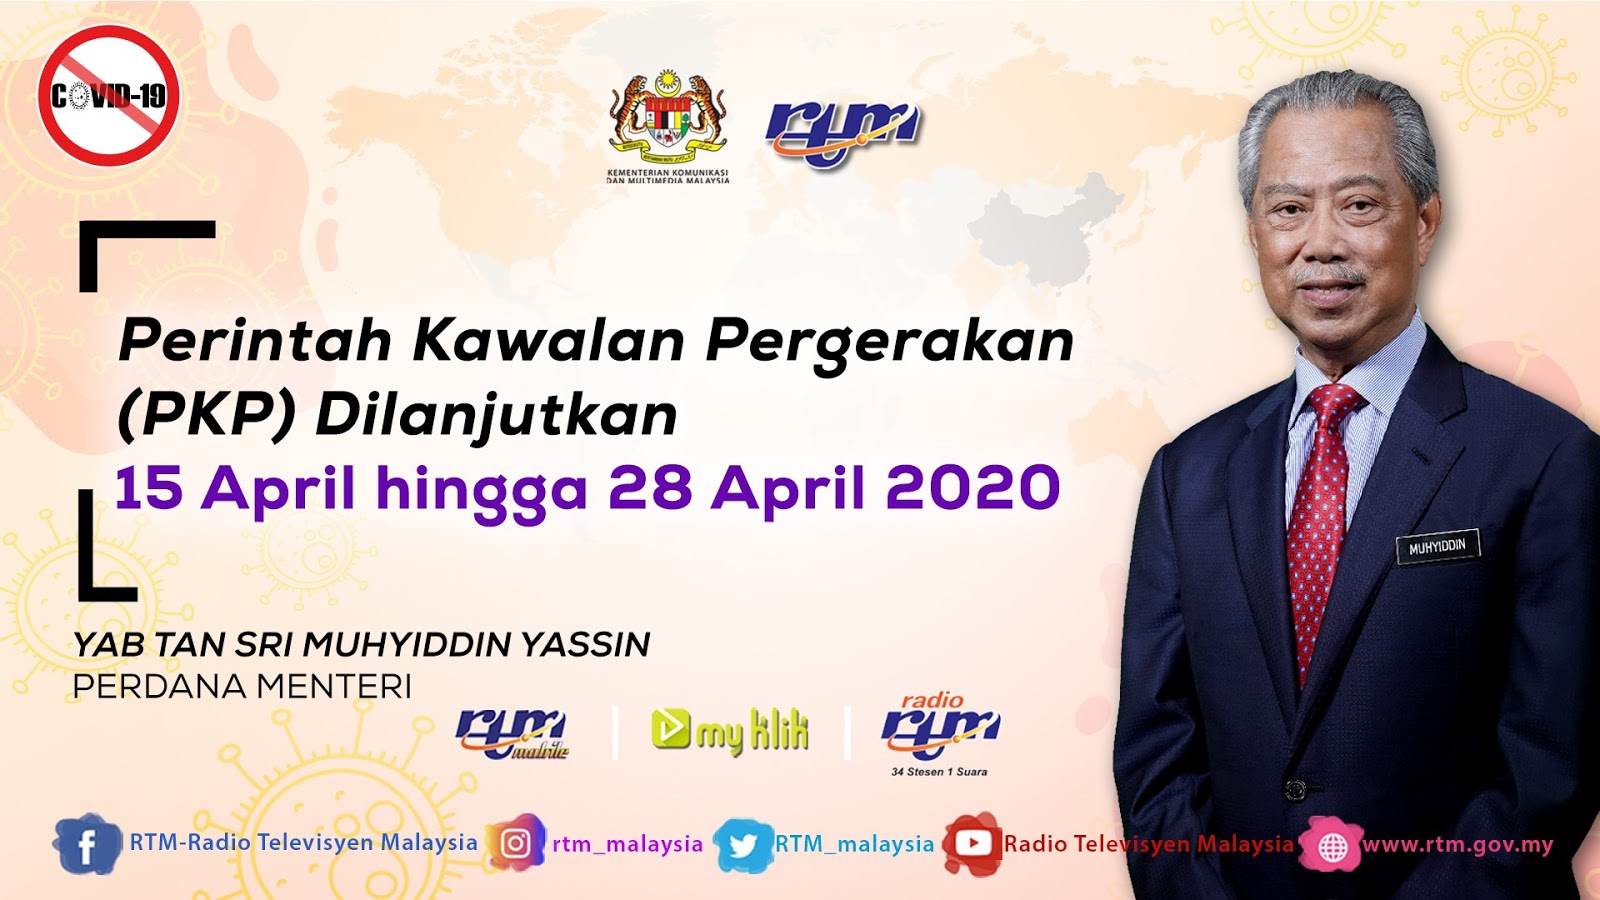 Malaysia fasa pkp di PKP: Penutupan